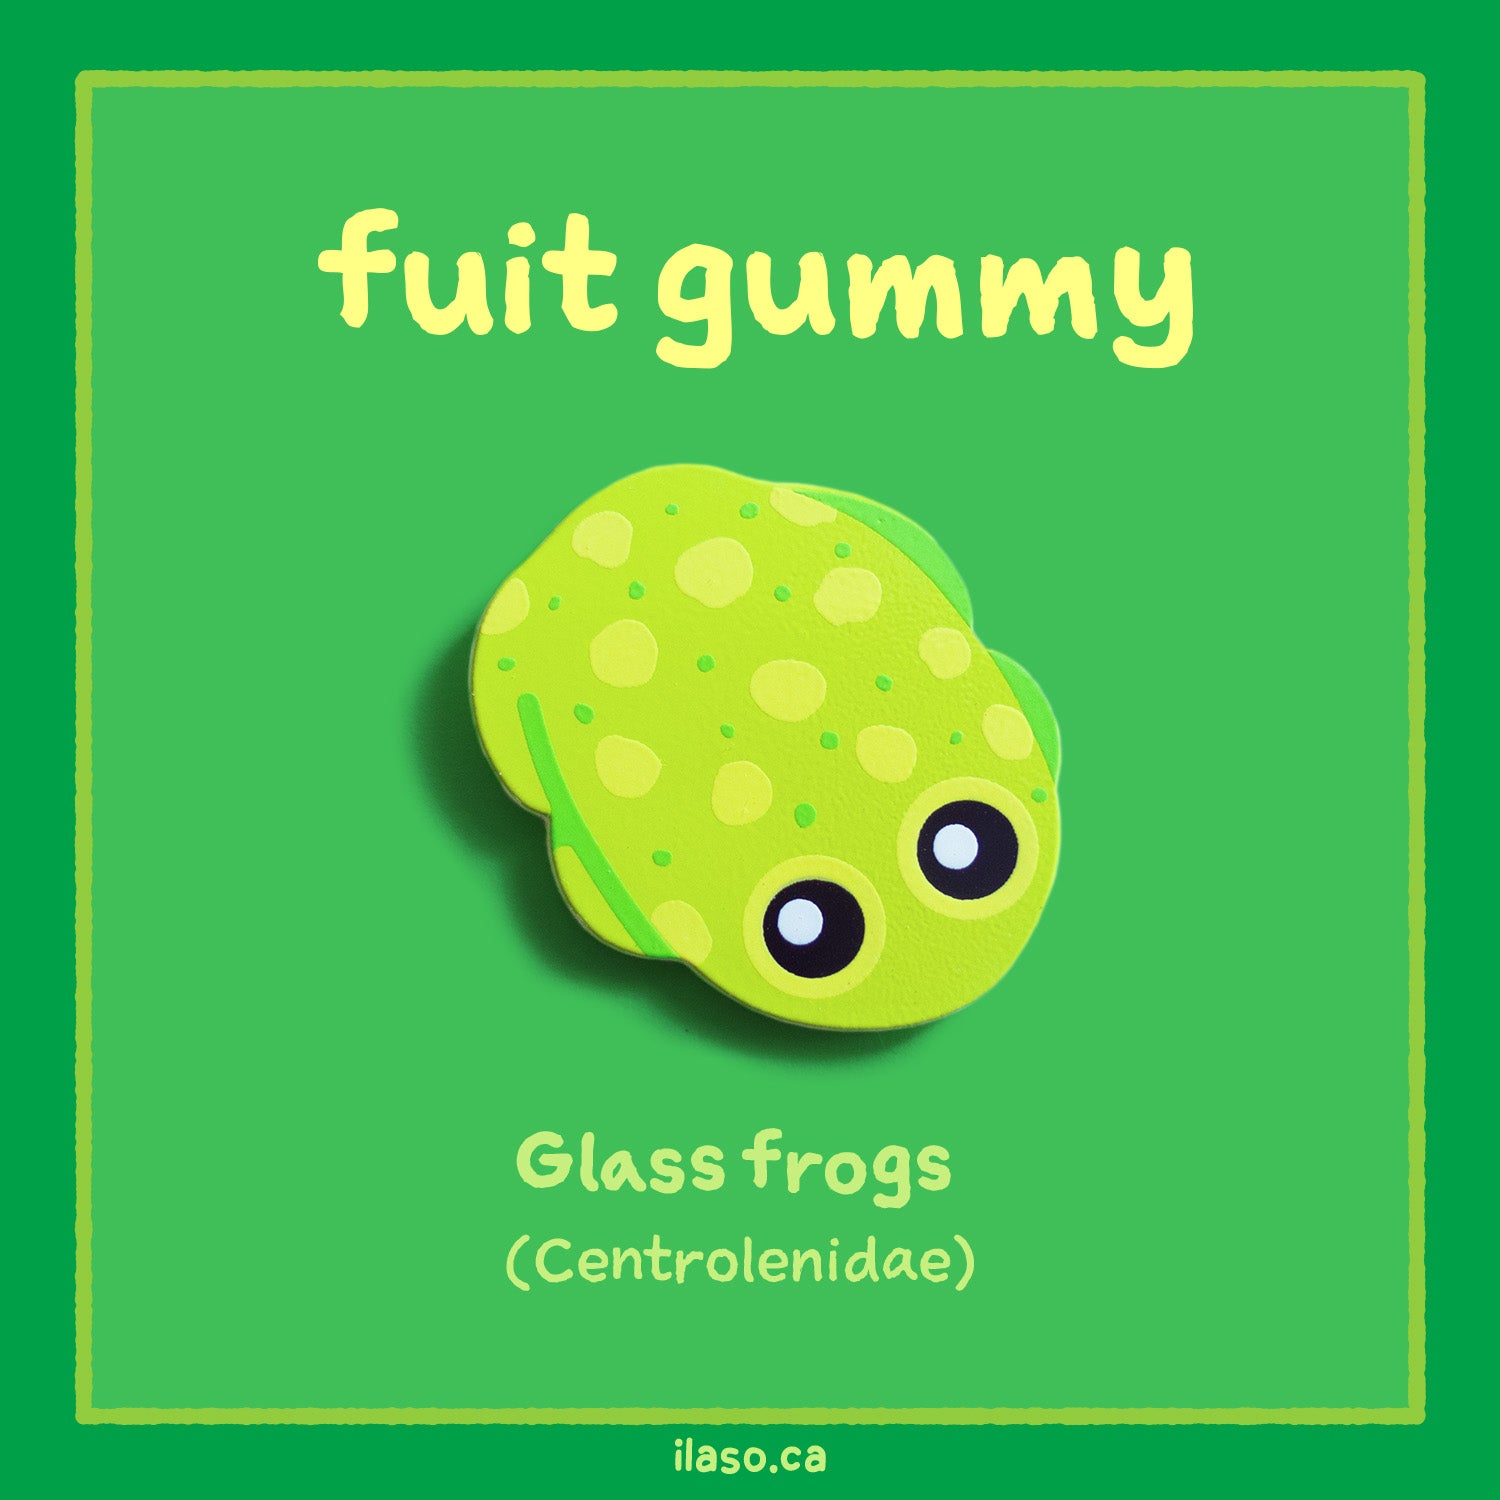 fuit gummy pin (Glass frog)